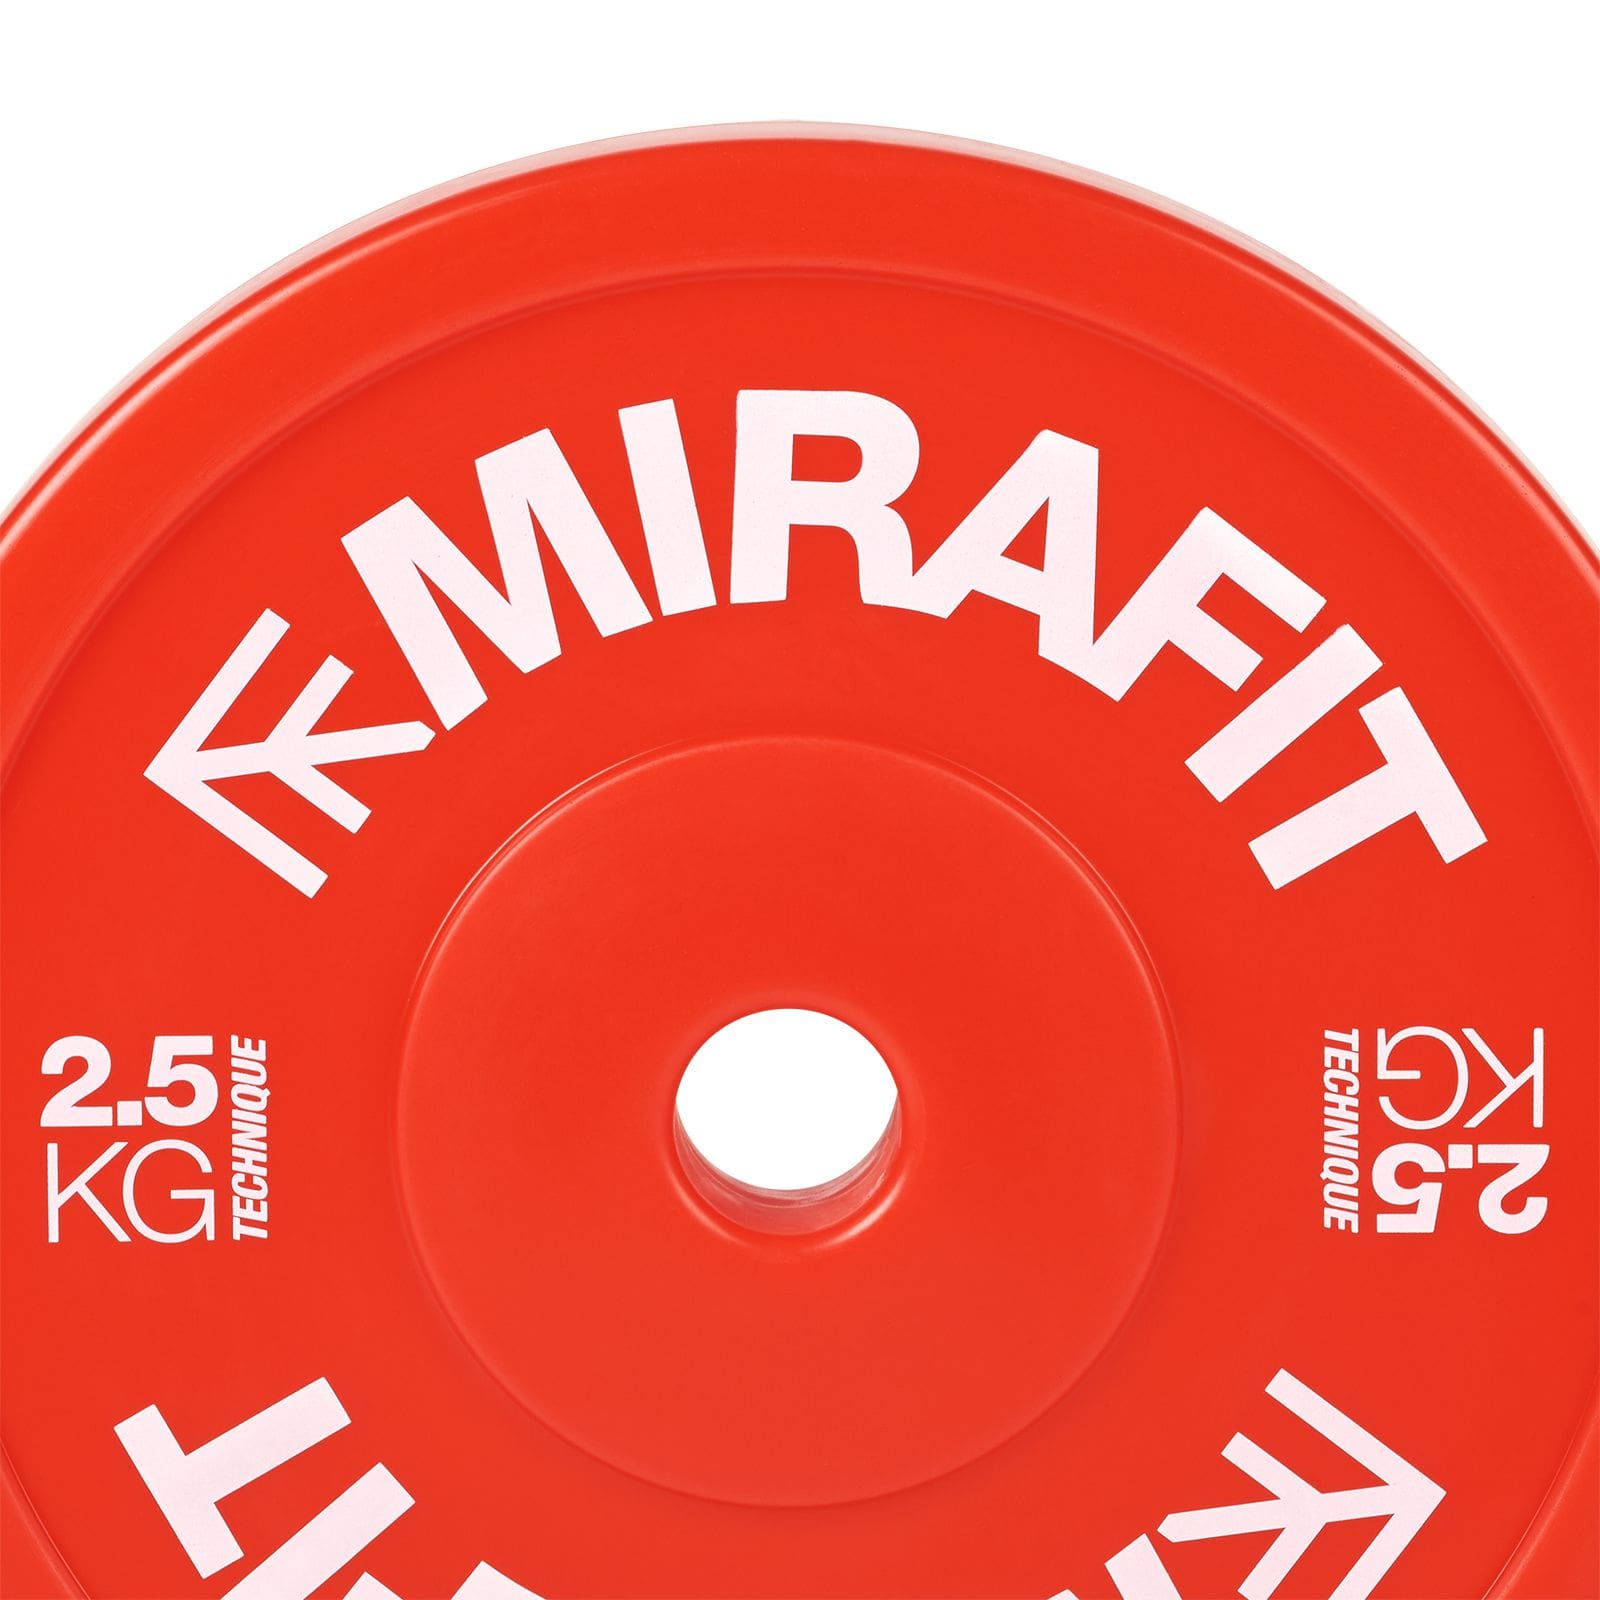 Mirafit Olympic Technique Bumper Plate 2.5kg review